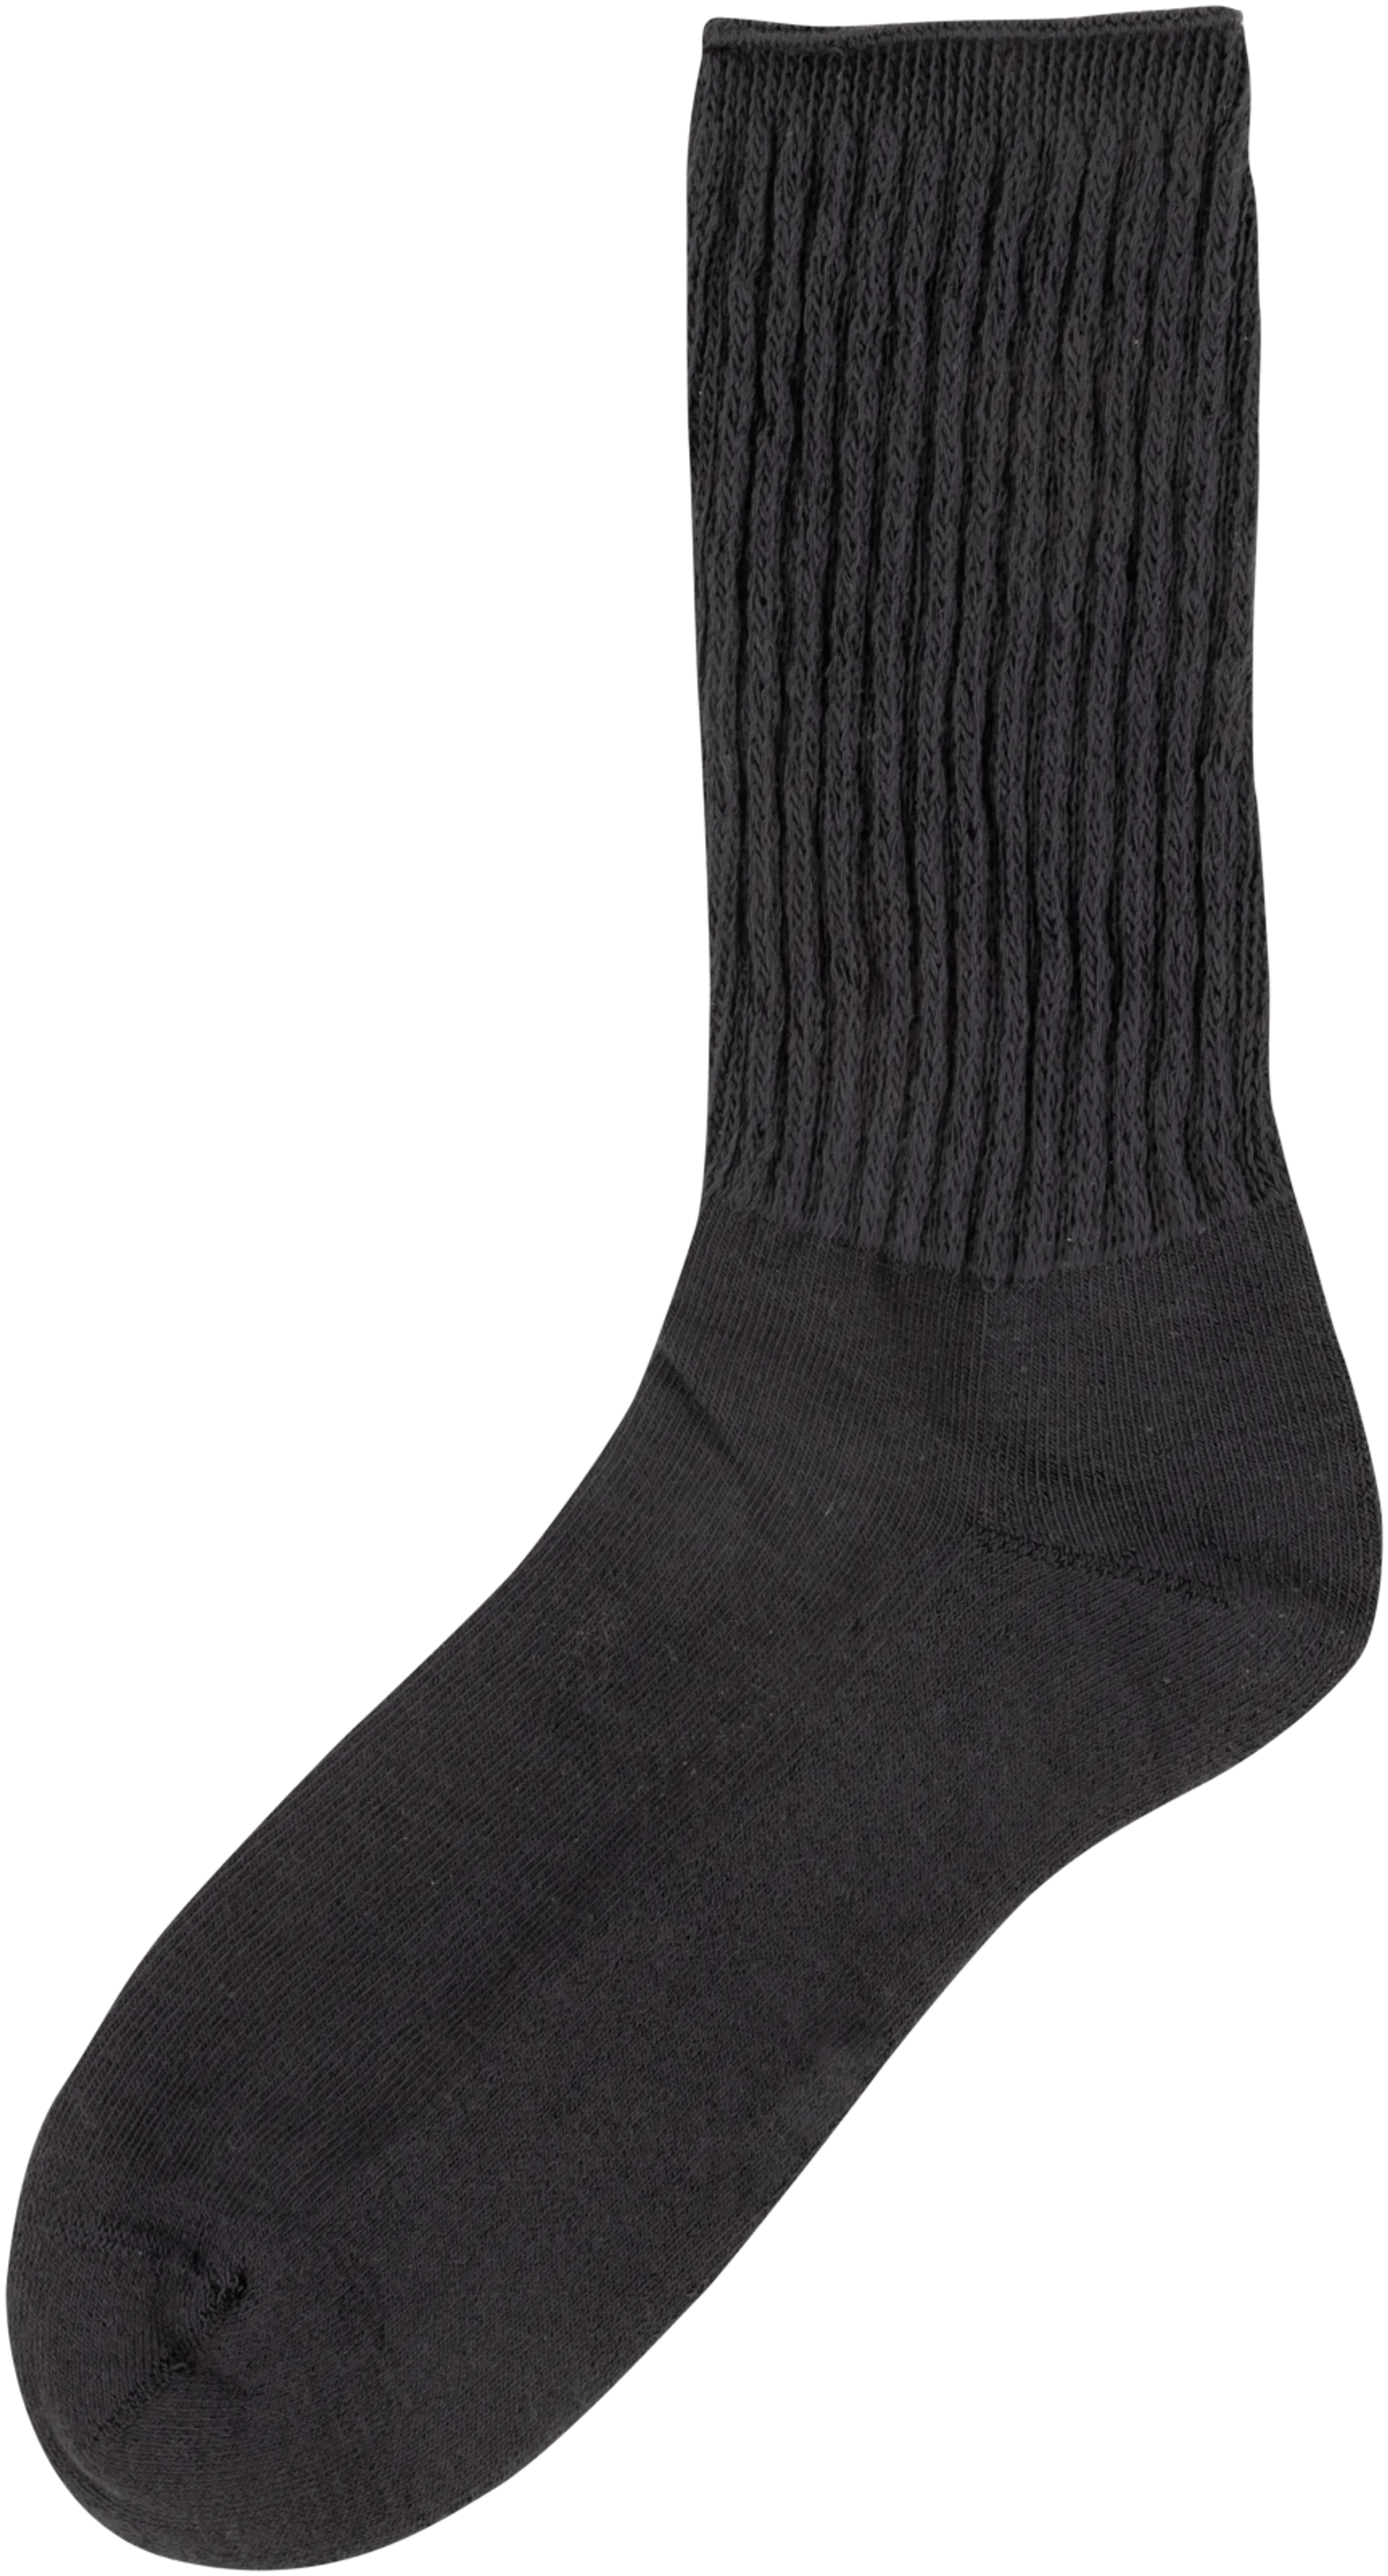 House miesten kiristämättömät sukat 193HNO2405 2-pack - Dk grey/ black - 2